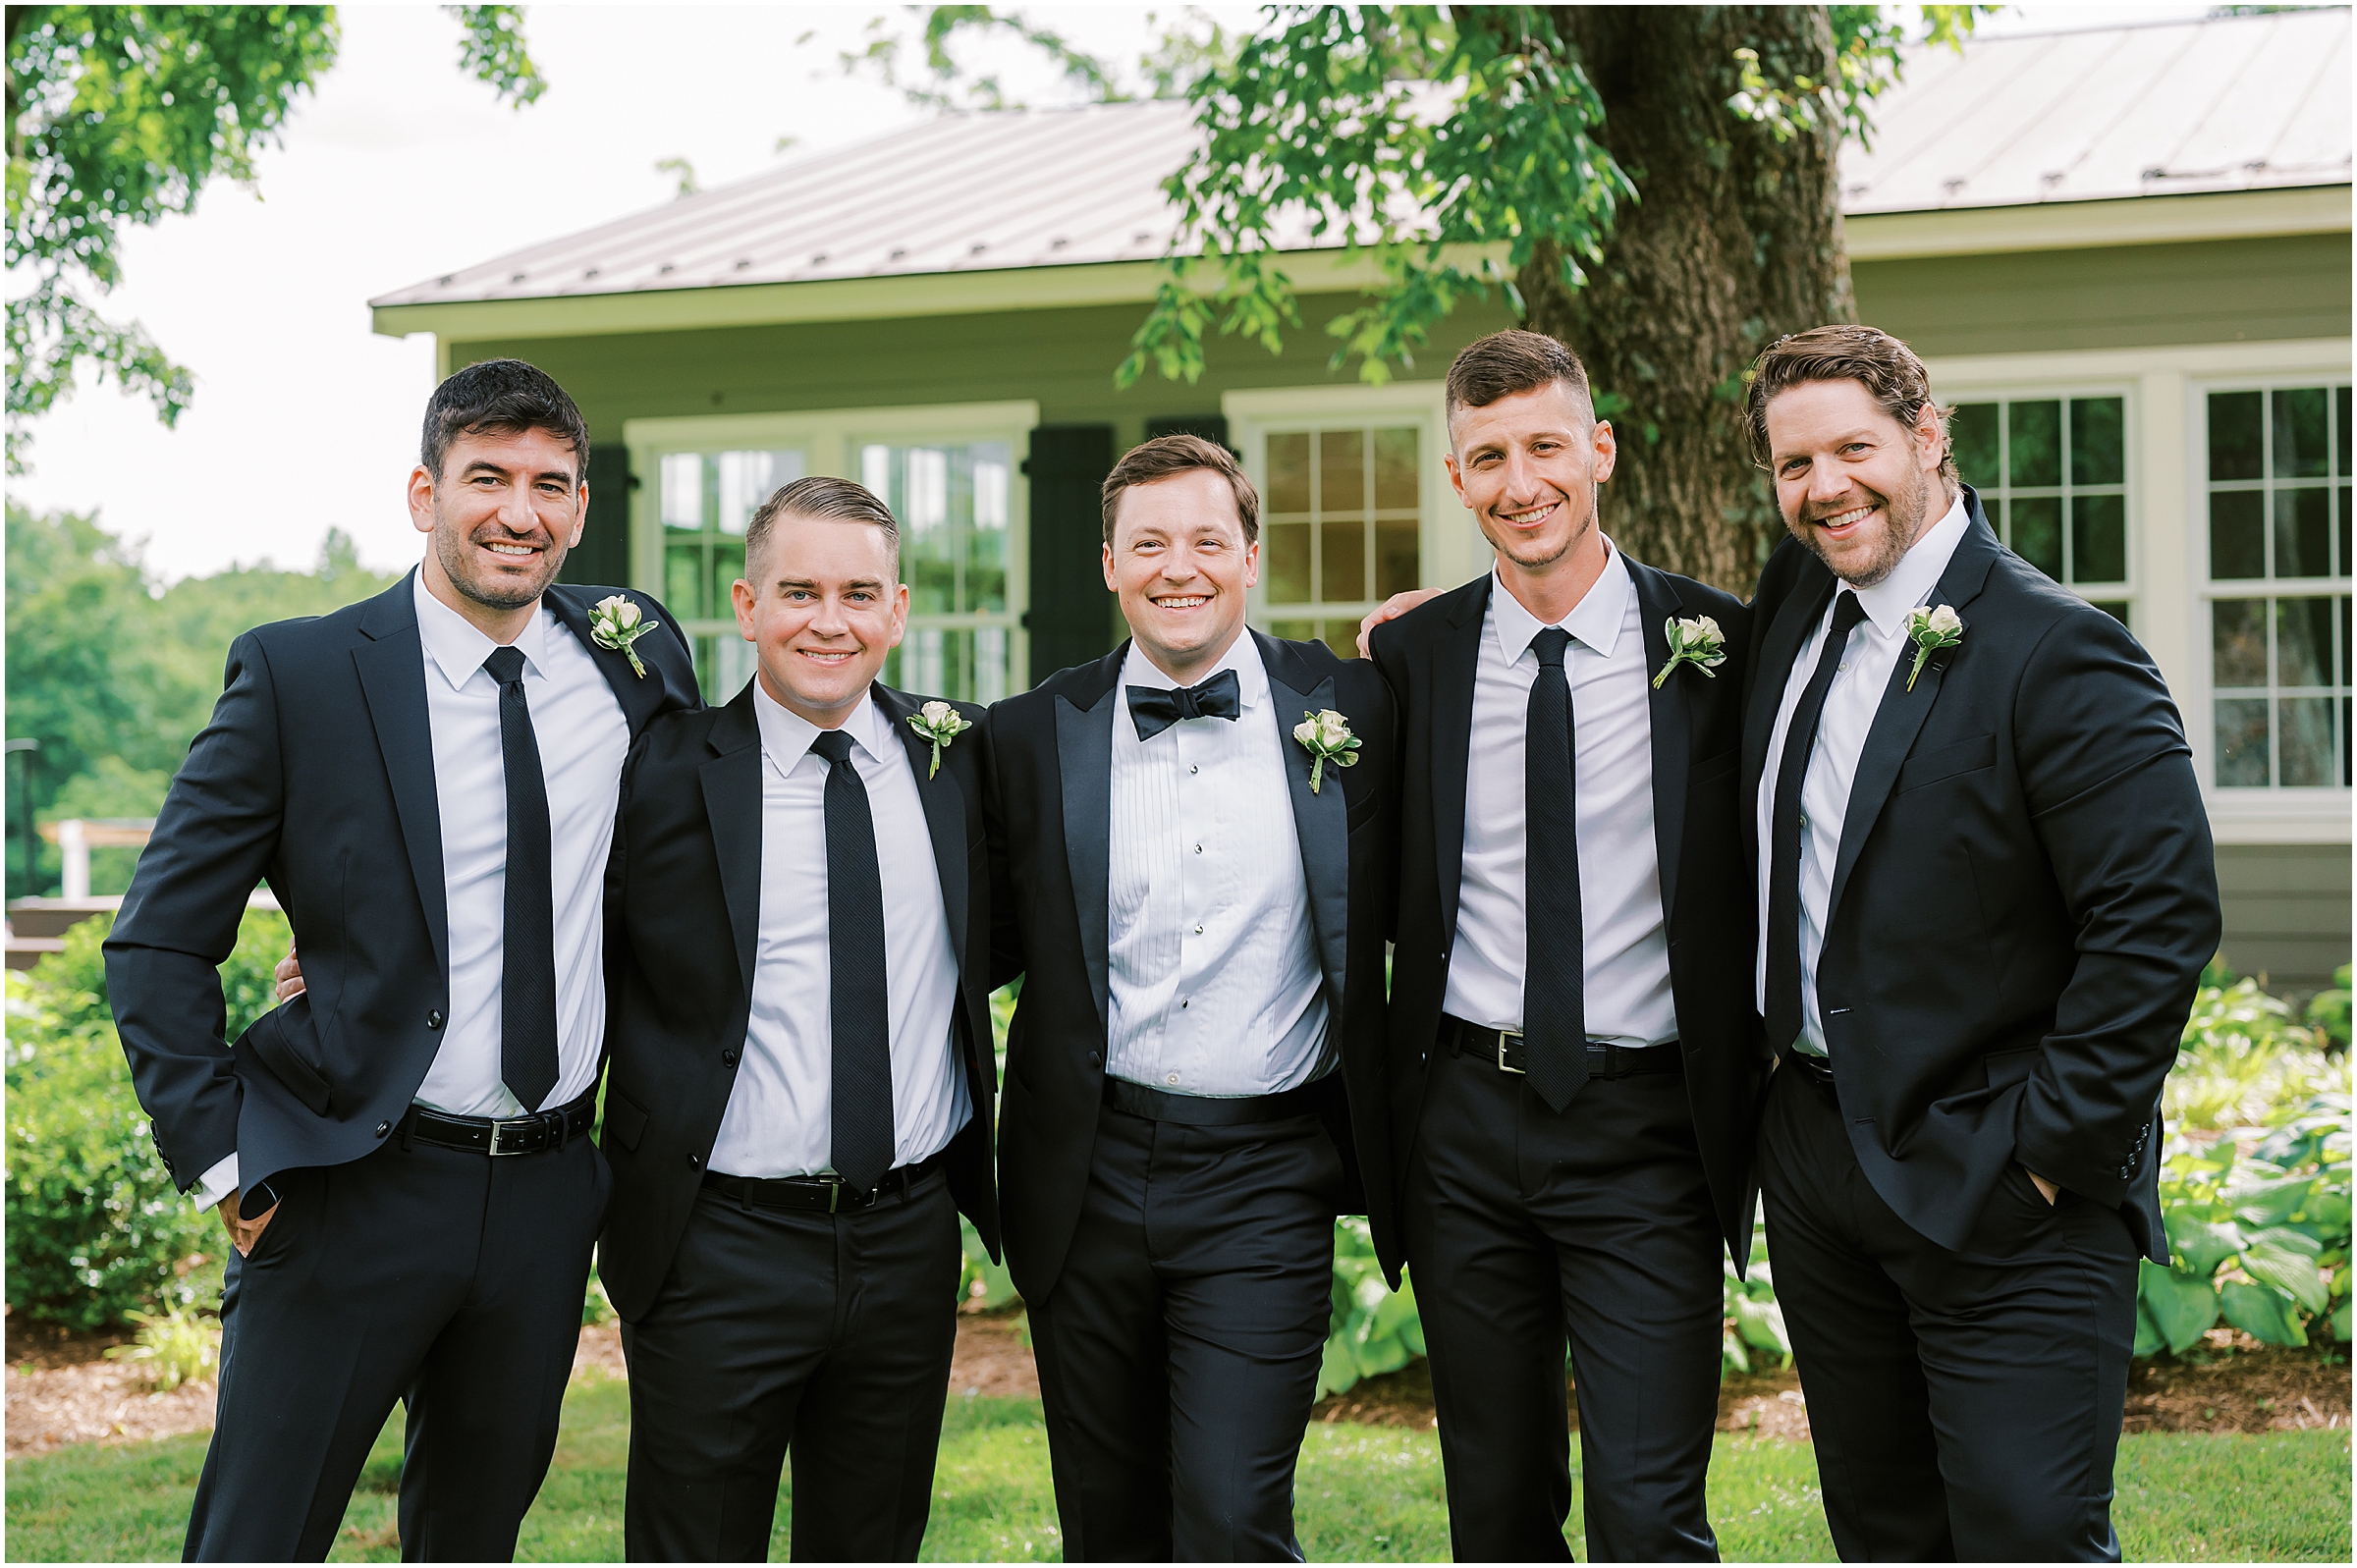 Groom with groomsmen wearing classic black suits and ties